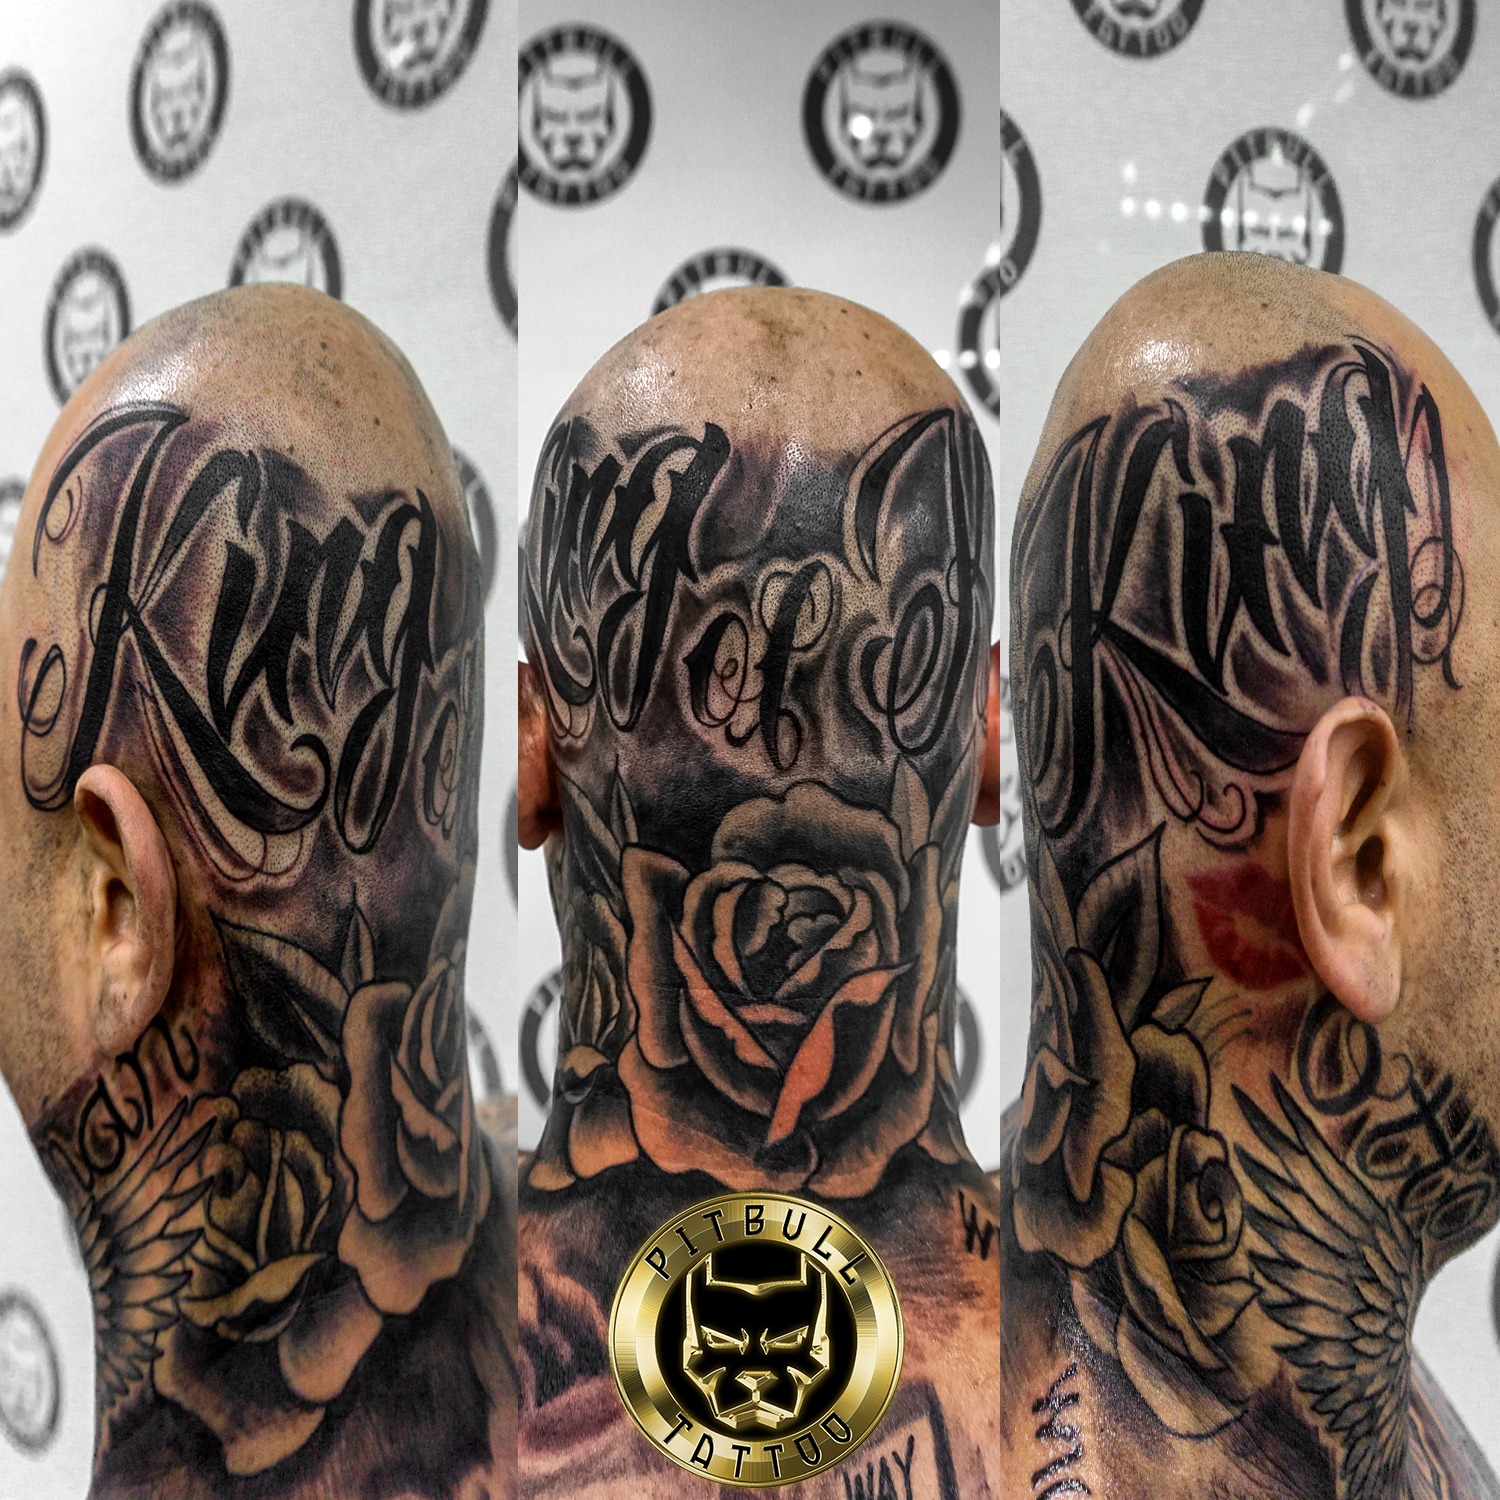 Hardcore Head Tattoo Specialization